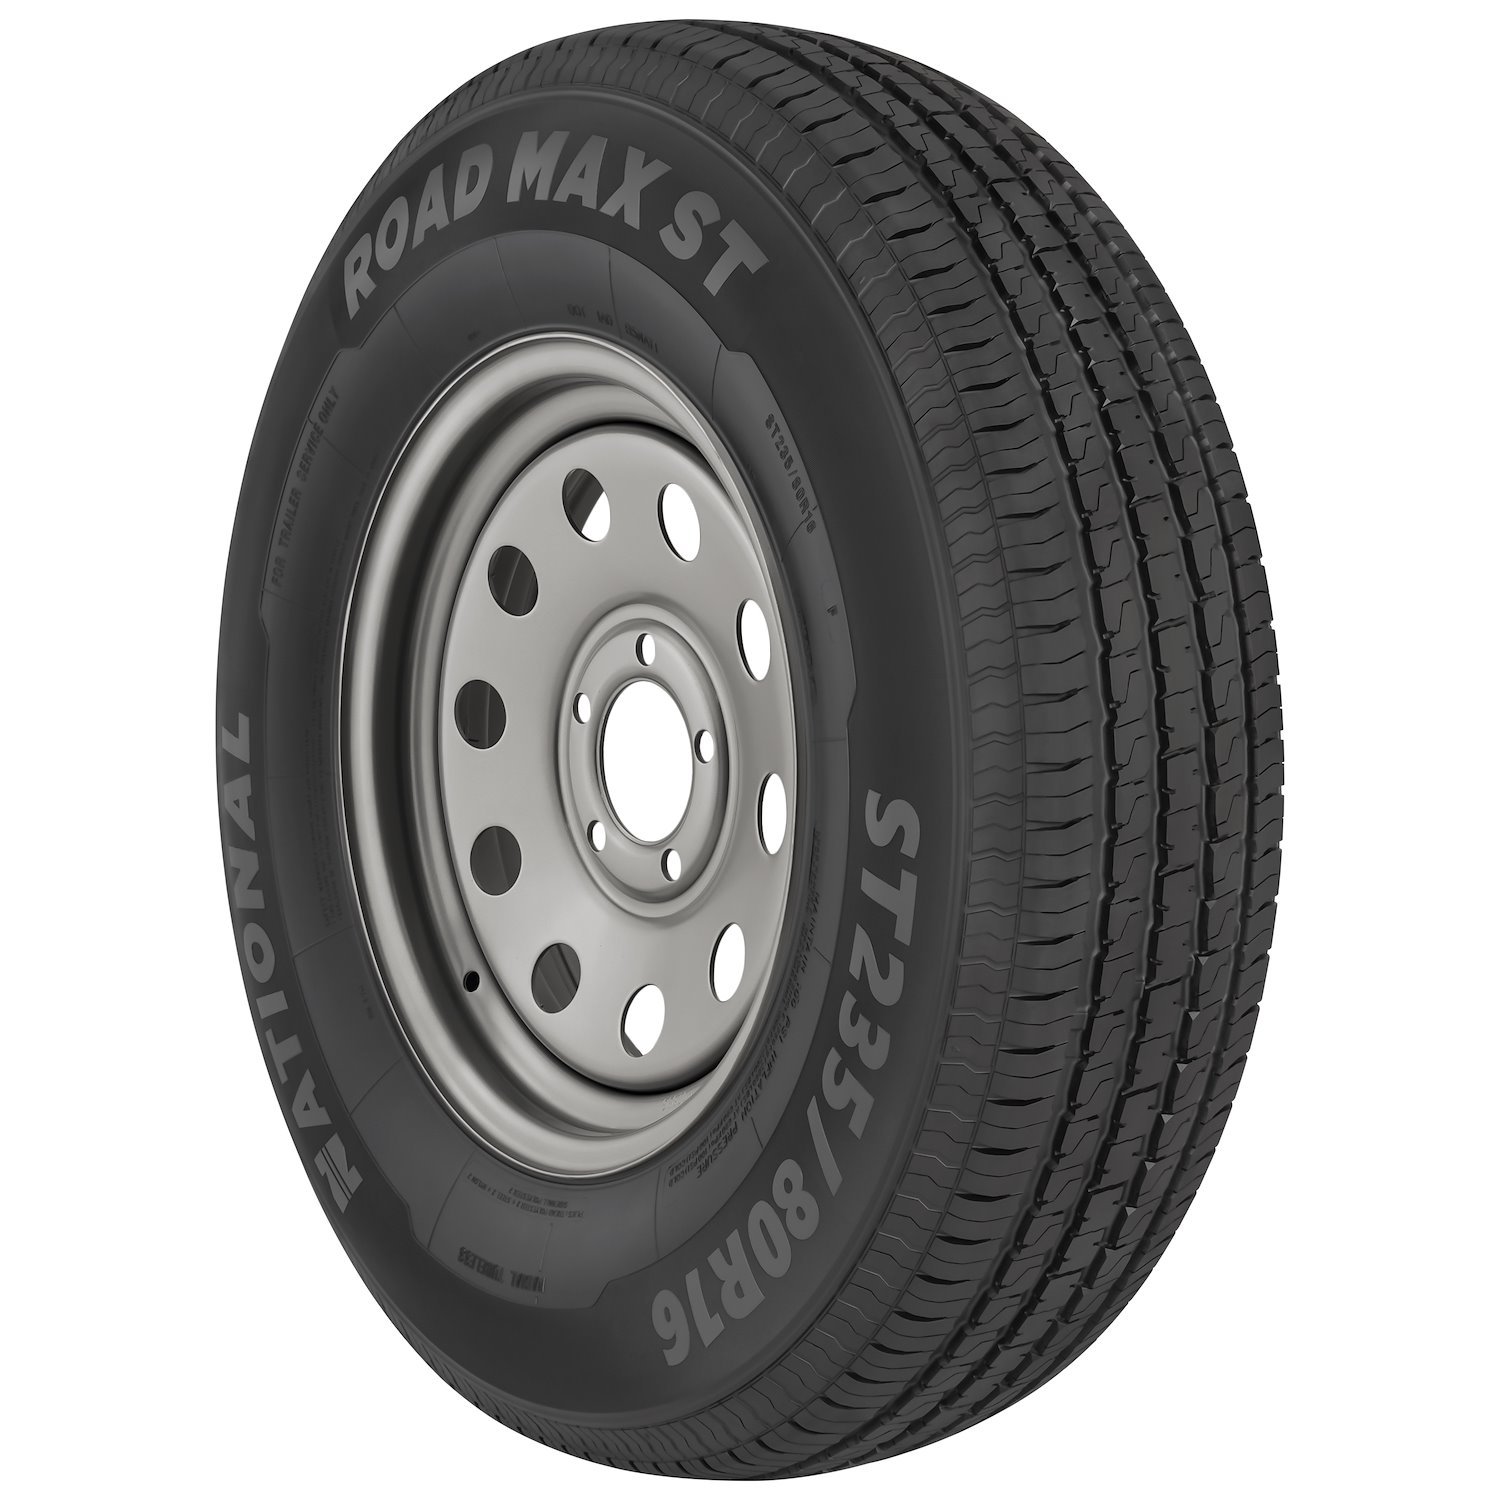 NRM39 Road MAX ST Tire, ST215/75R14